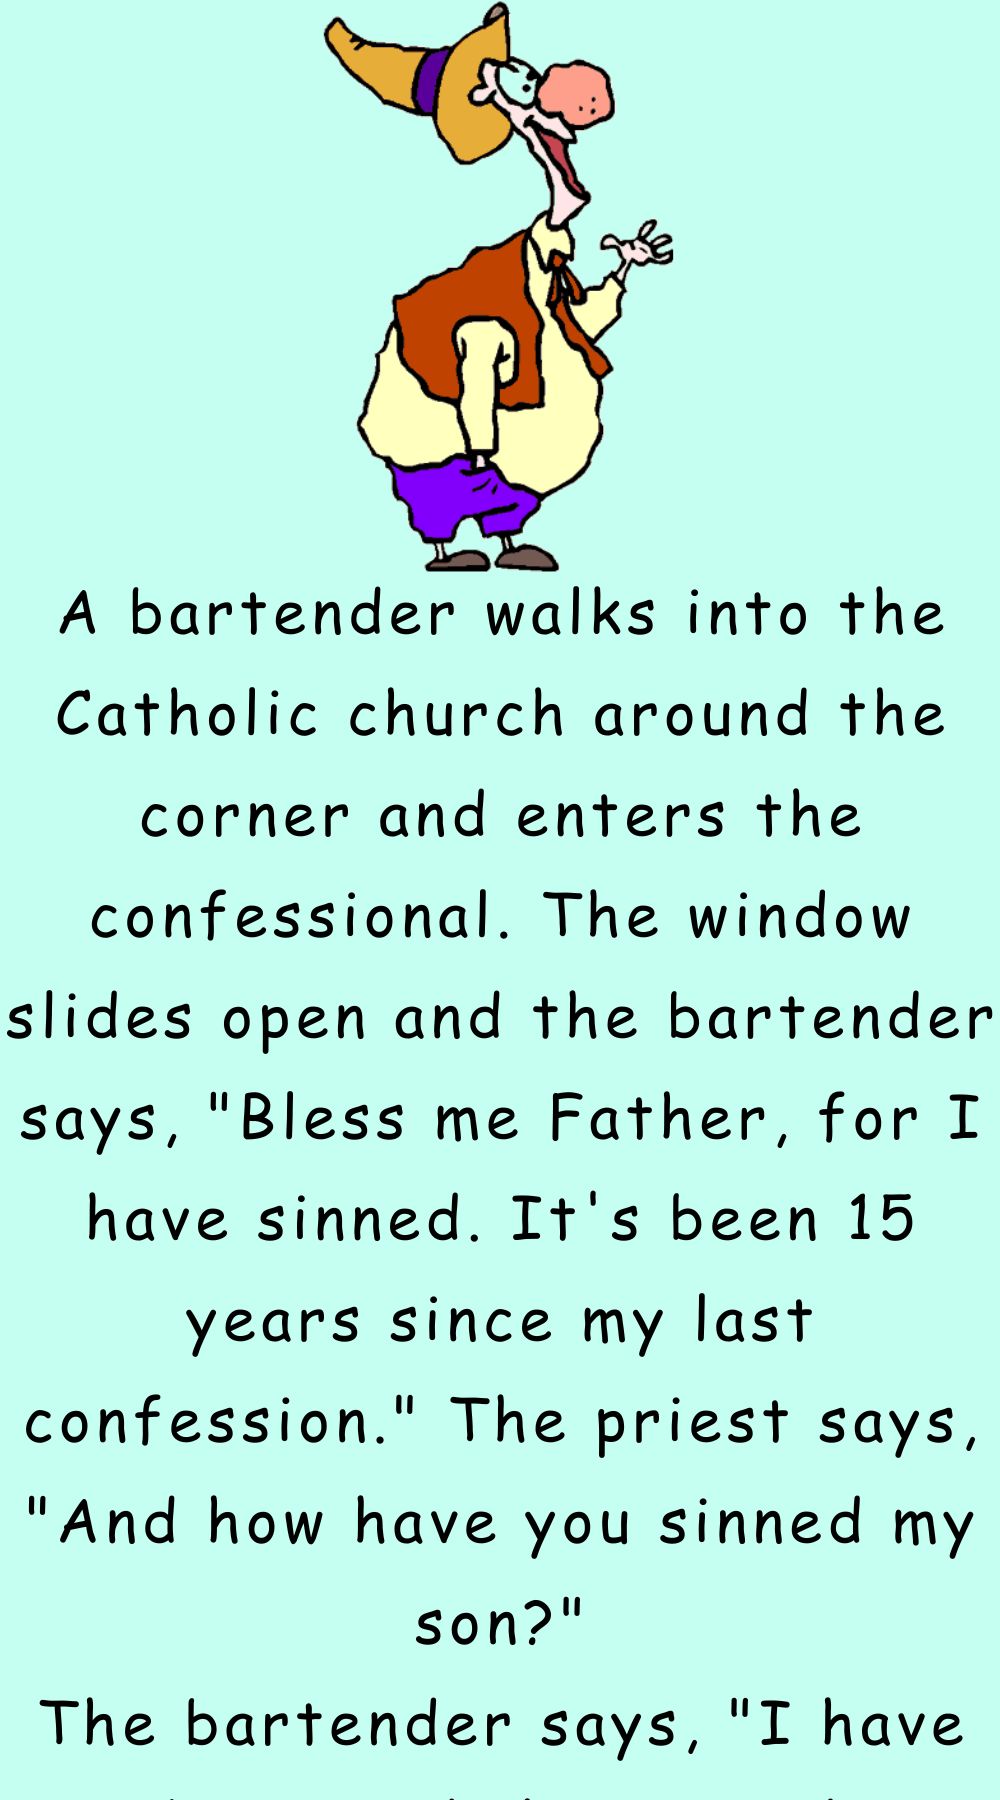 A bartender walks into the Catholic church